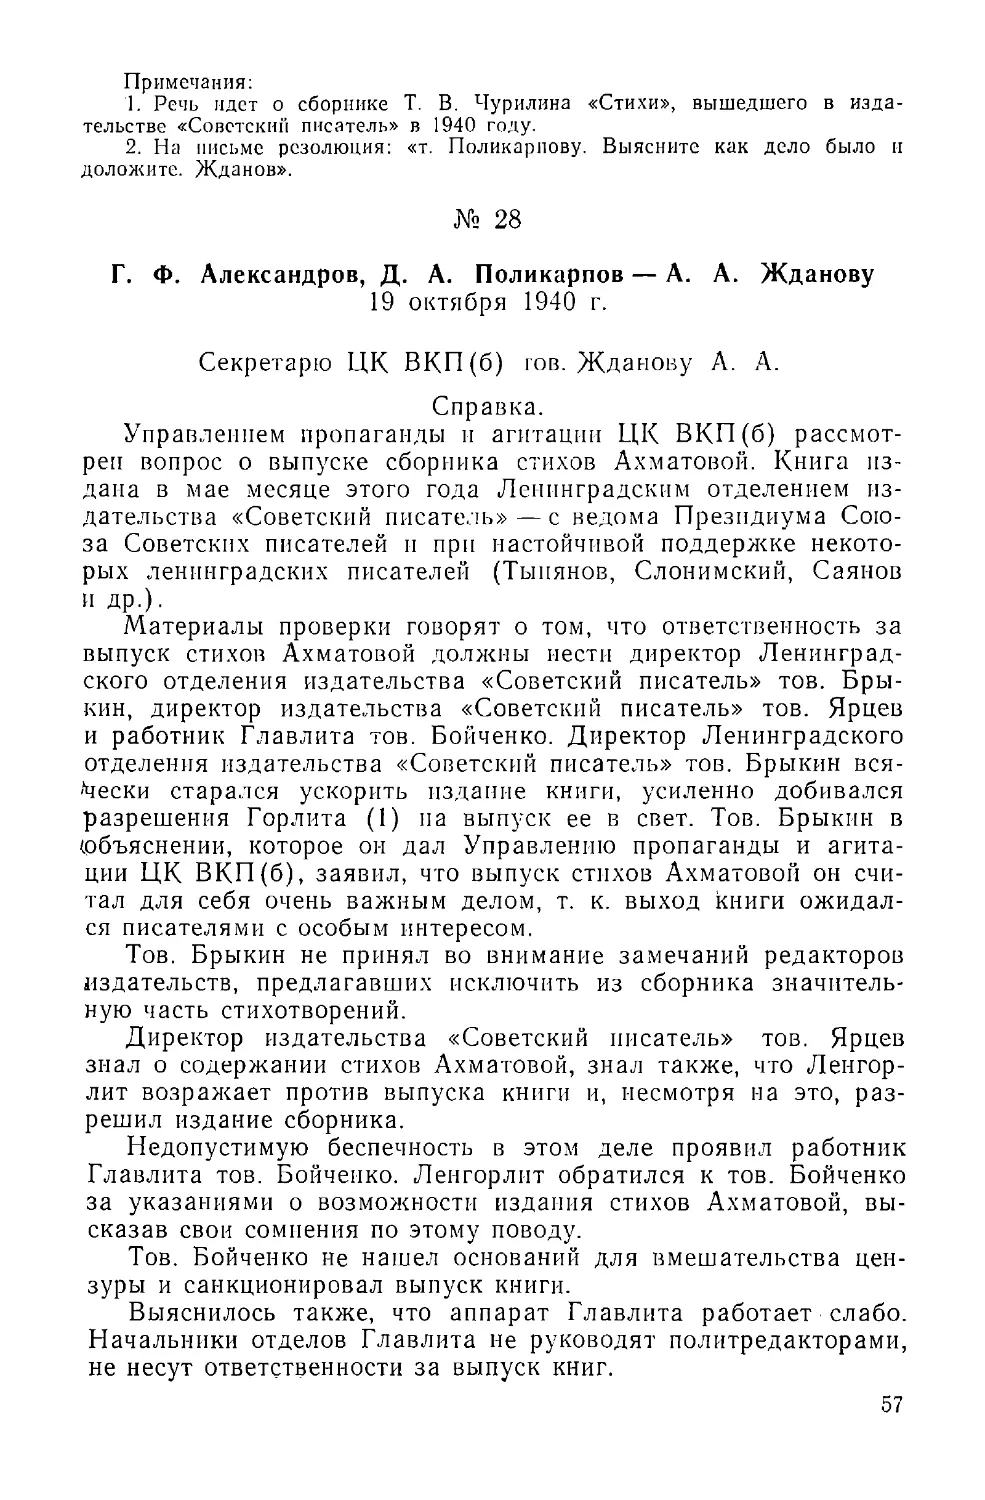 Г. Ф. Александров, Д. А. Поликарпов — А. А. Жданову